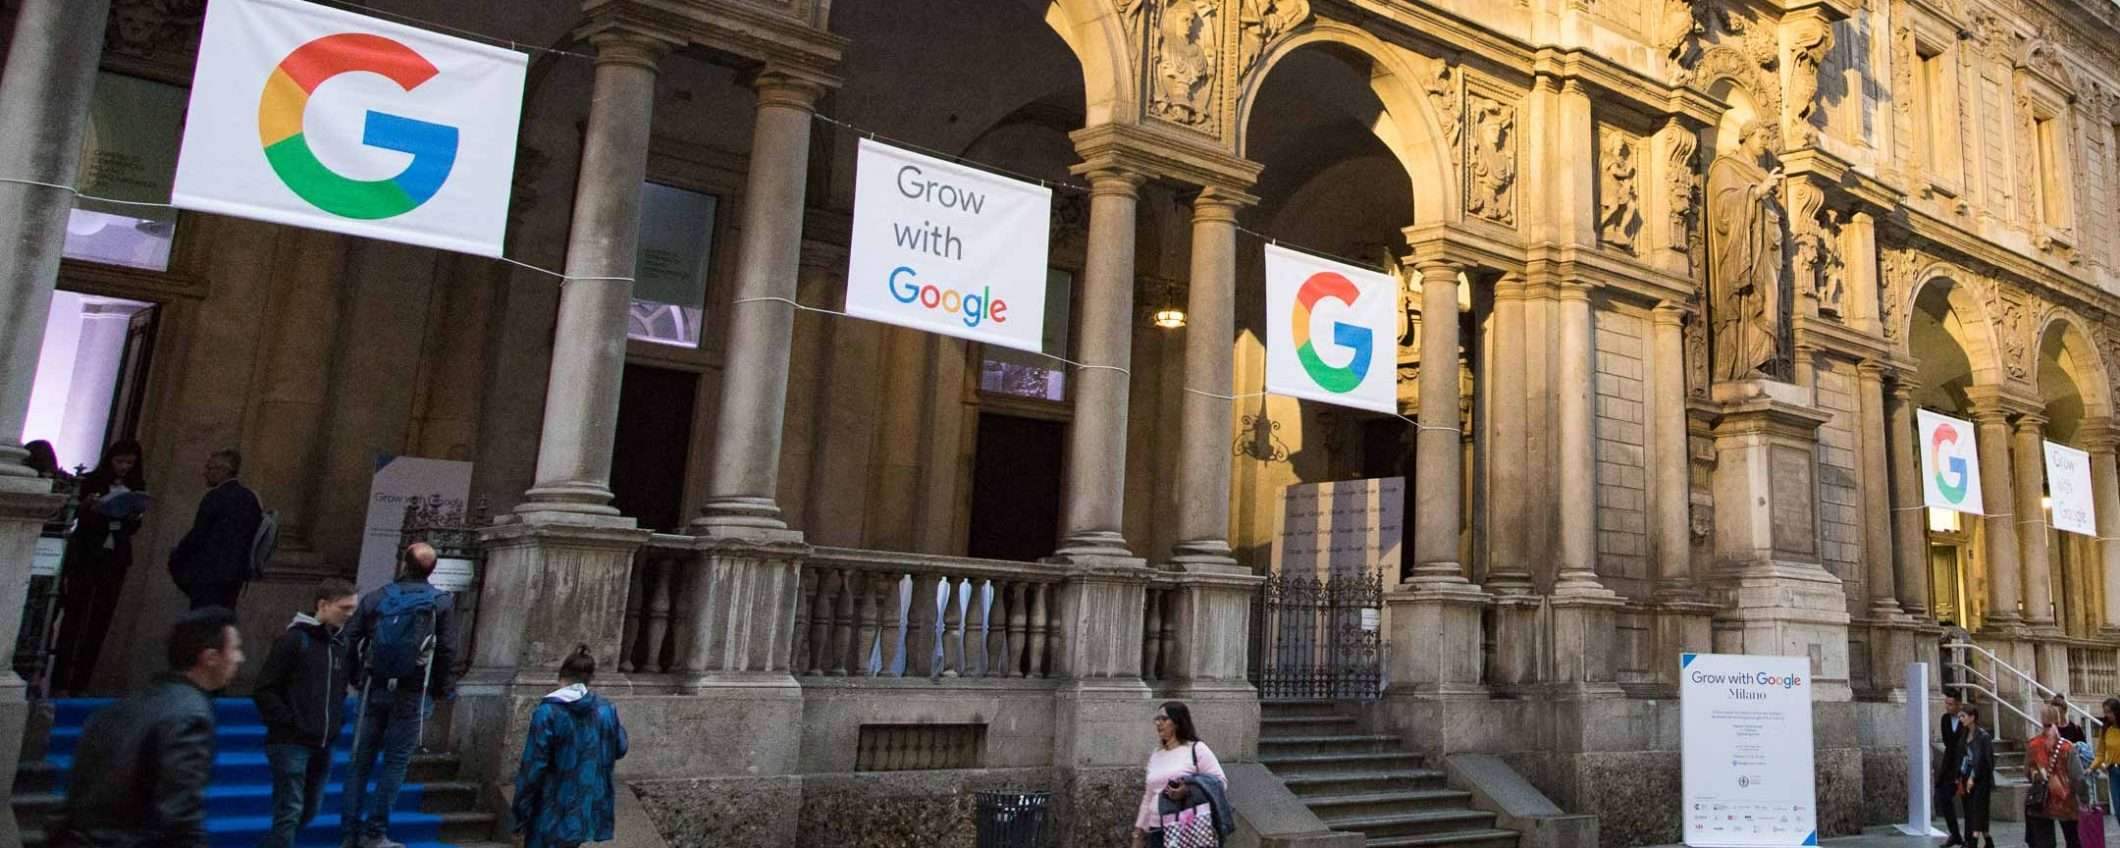 Grow with Google Milano, tra competenze e cultura